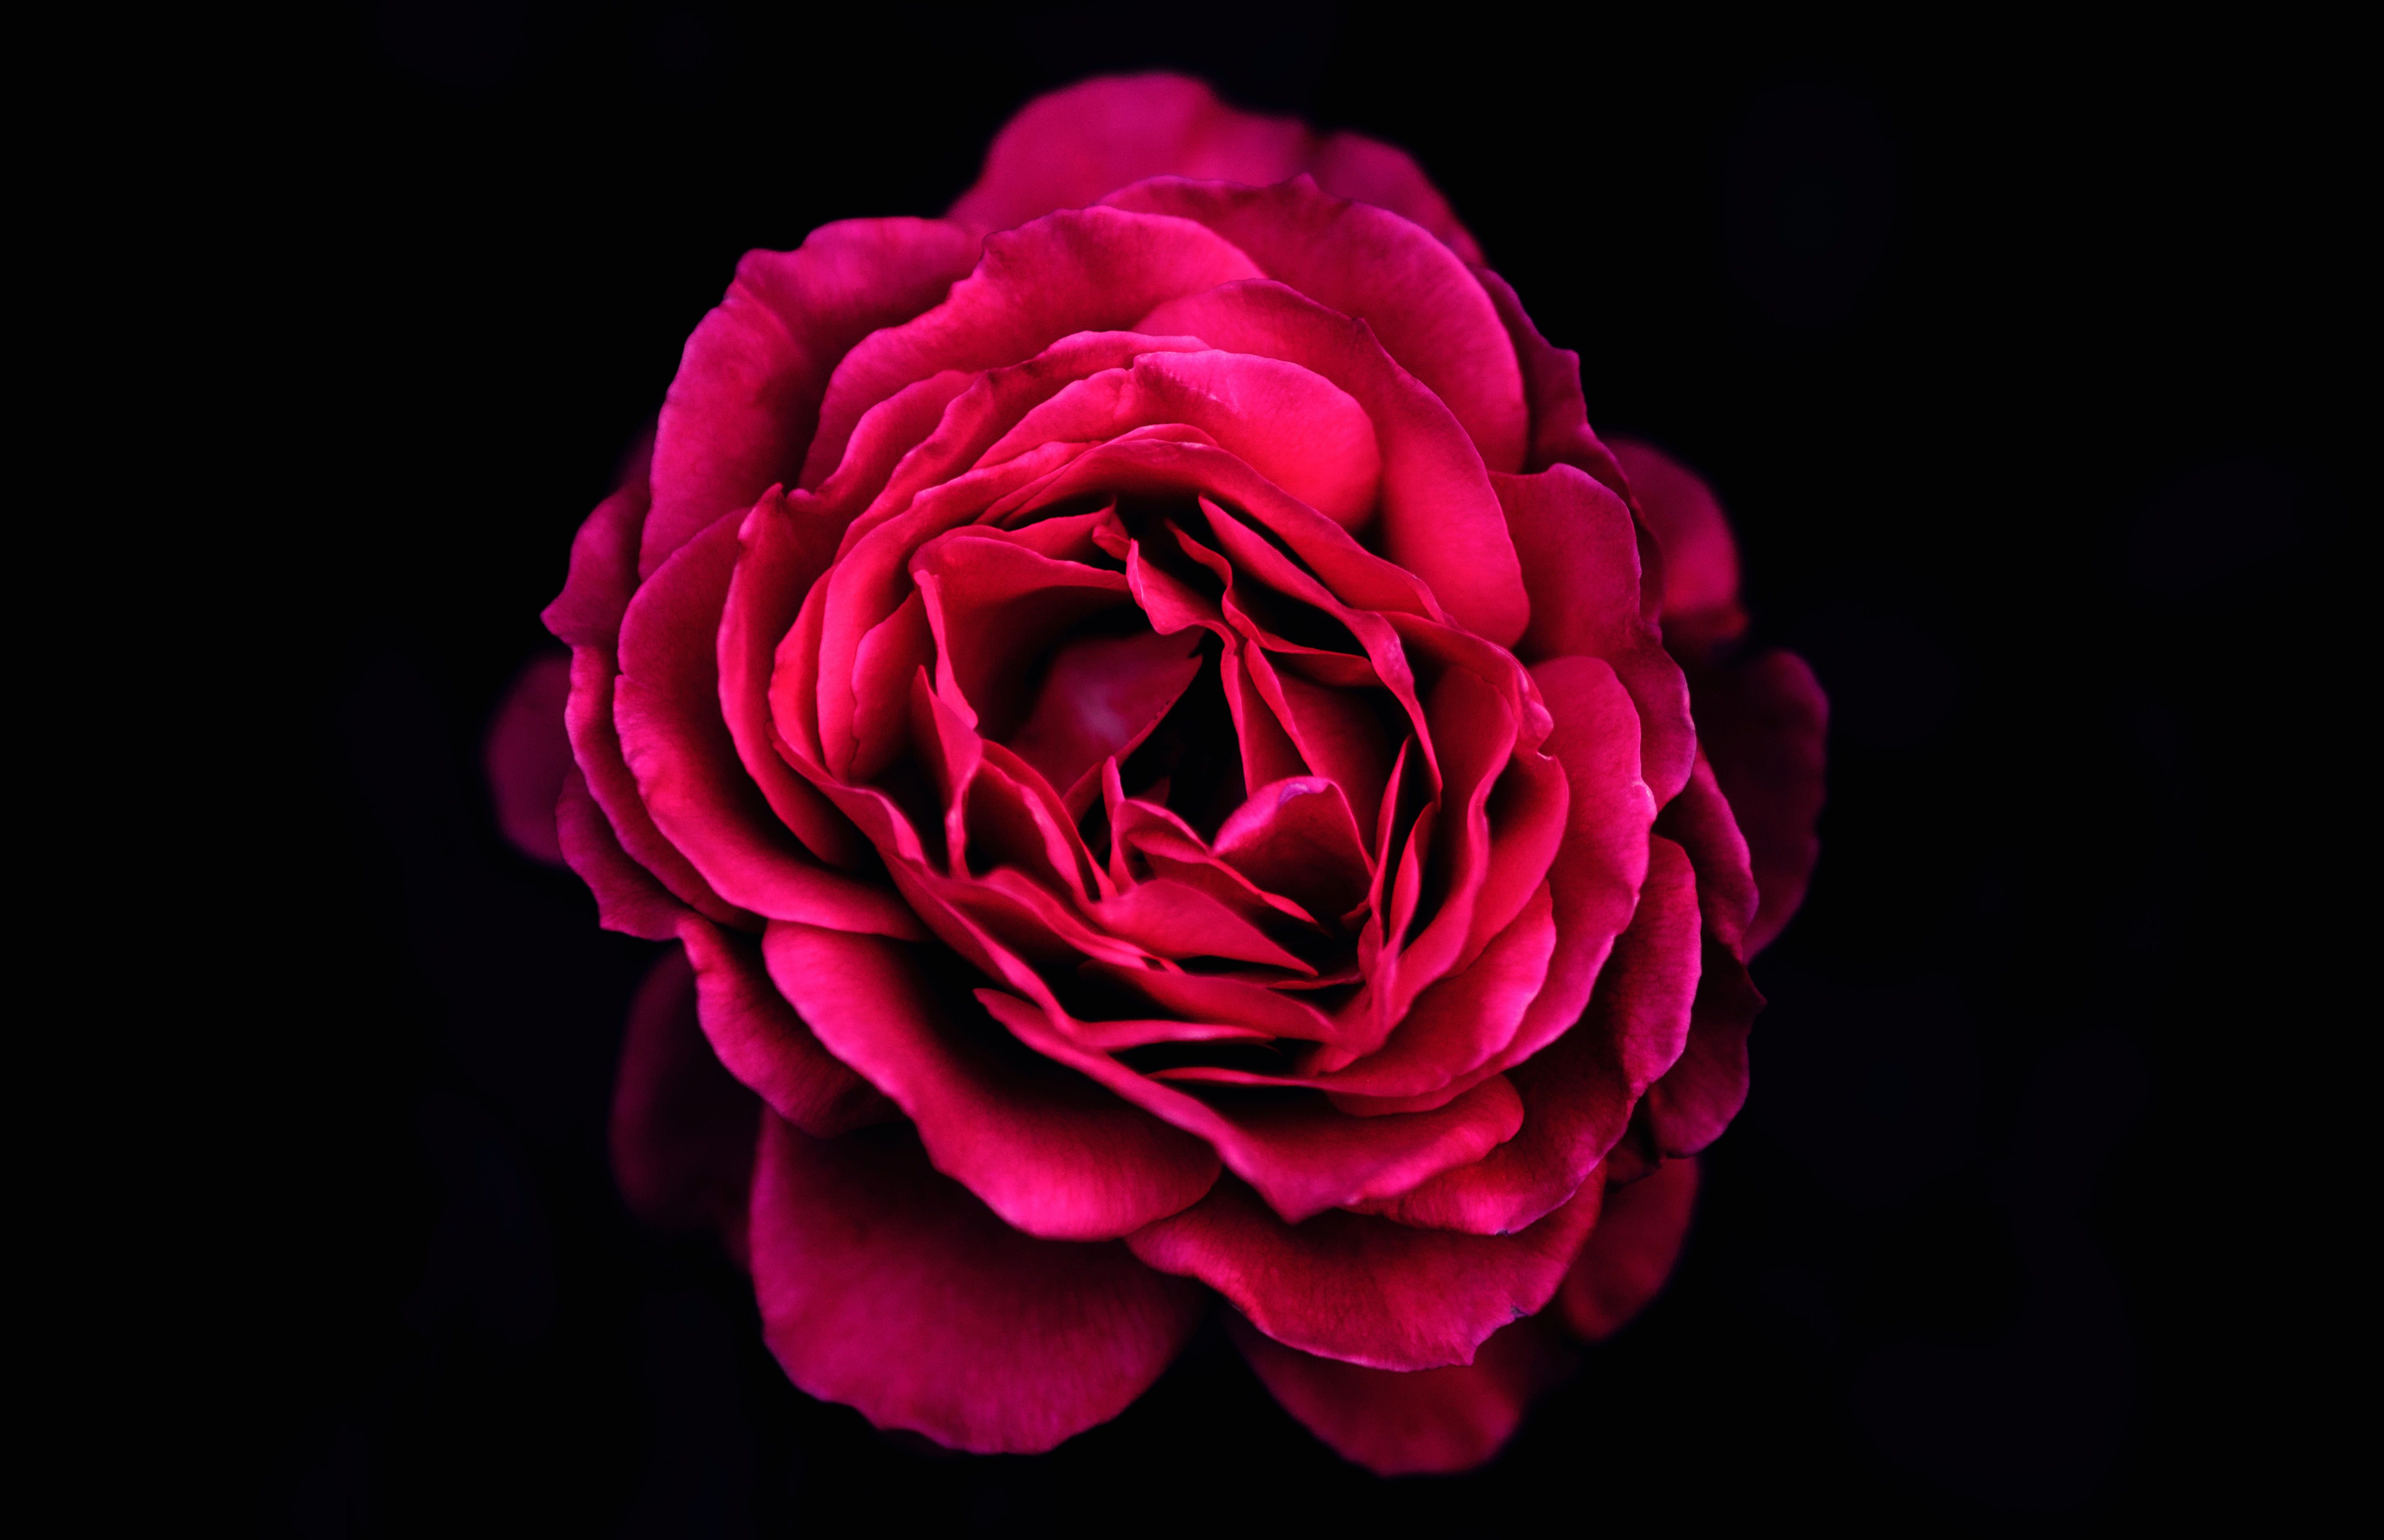 5795x3744 plant, pink, flower, italy, red, black, dark, pergine valsugana, violet, floral, petal, person, Creative Commons image, rose, human, blossom, design, people, flora, rose petal, bloom Gallery HD Wallpaper